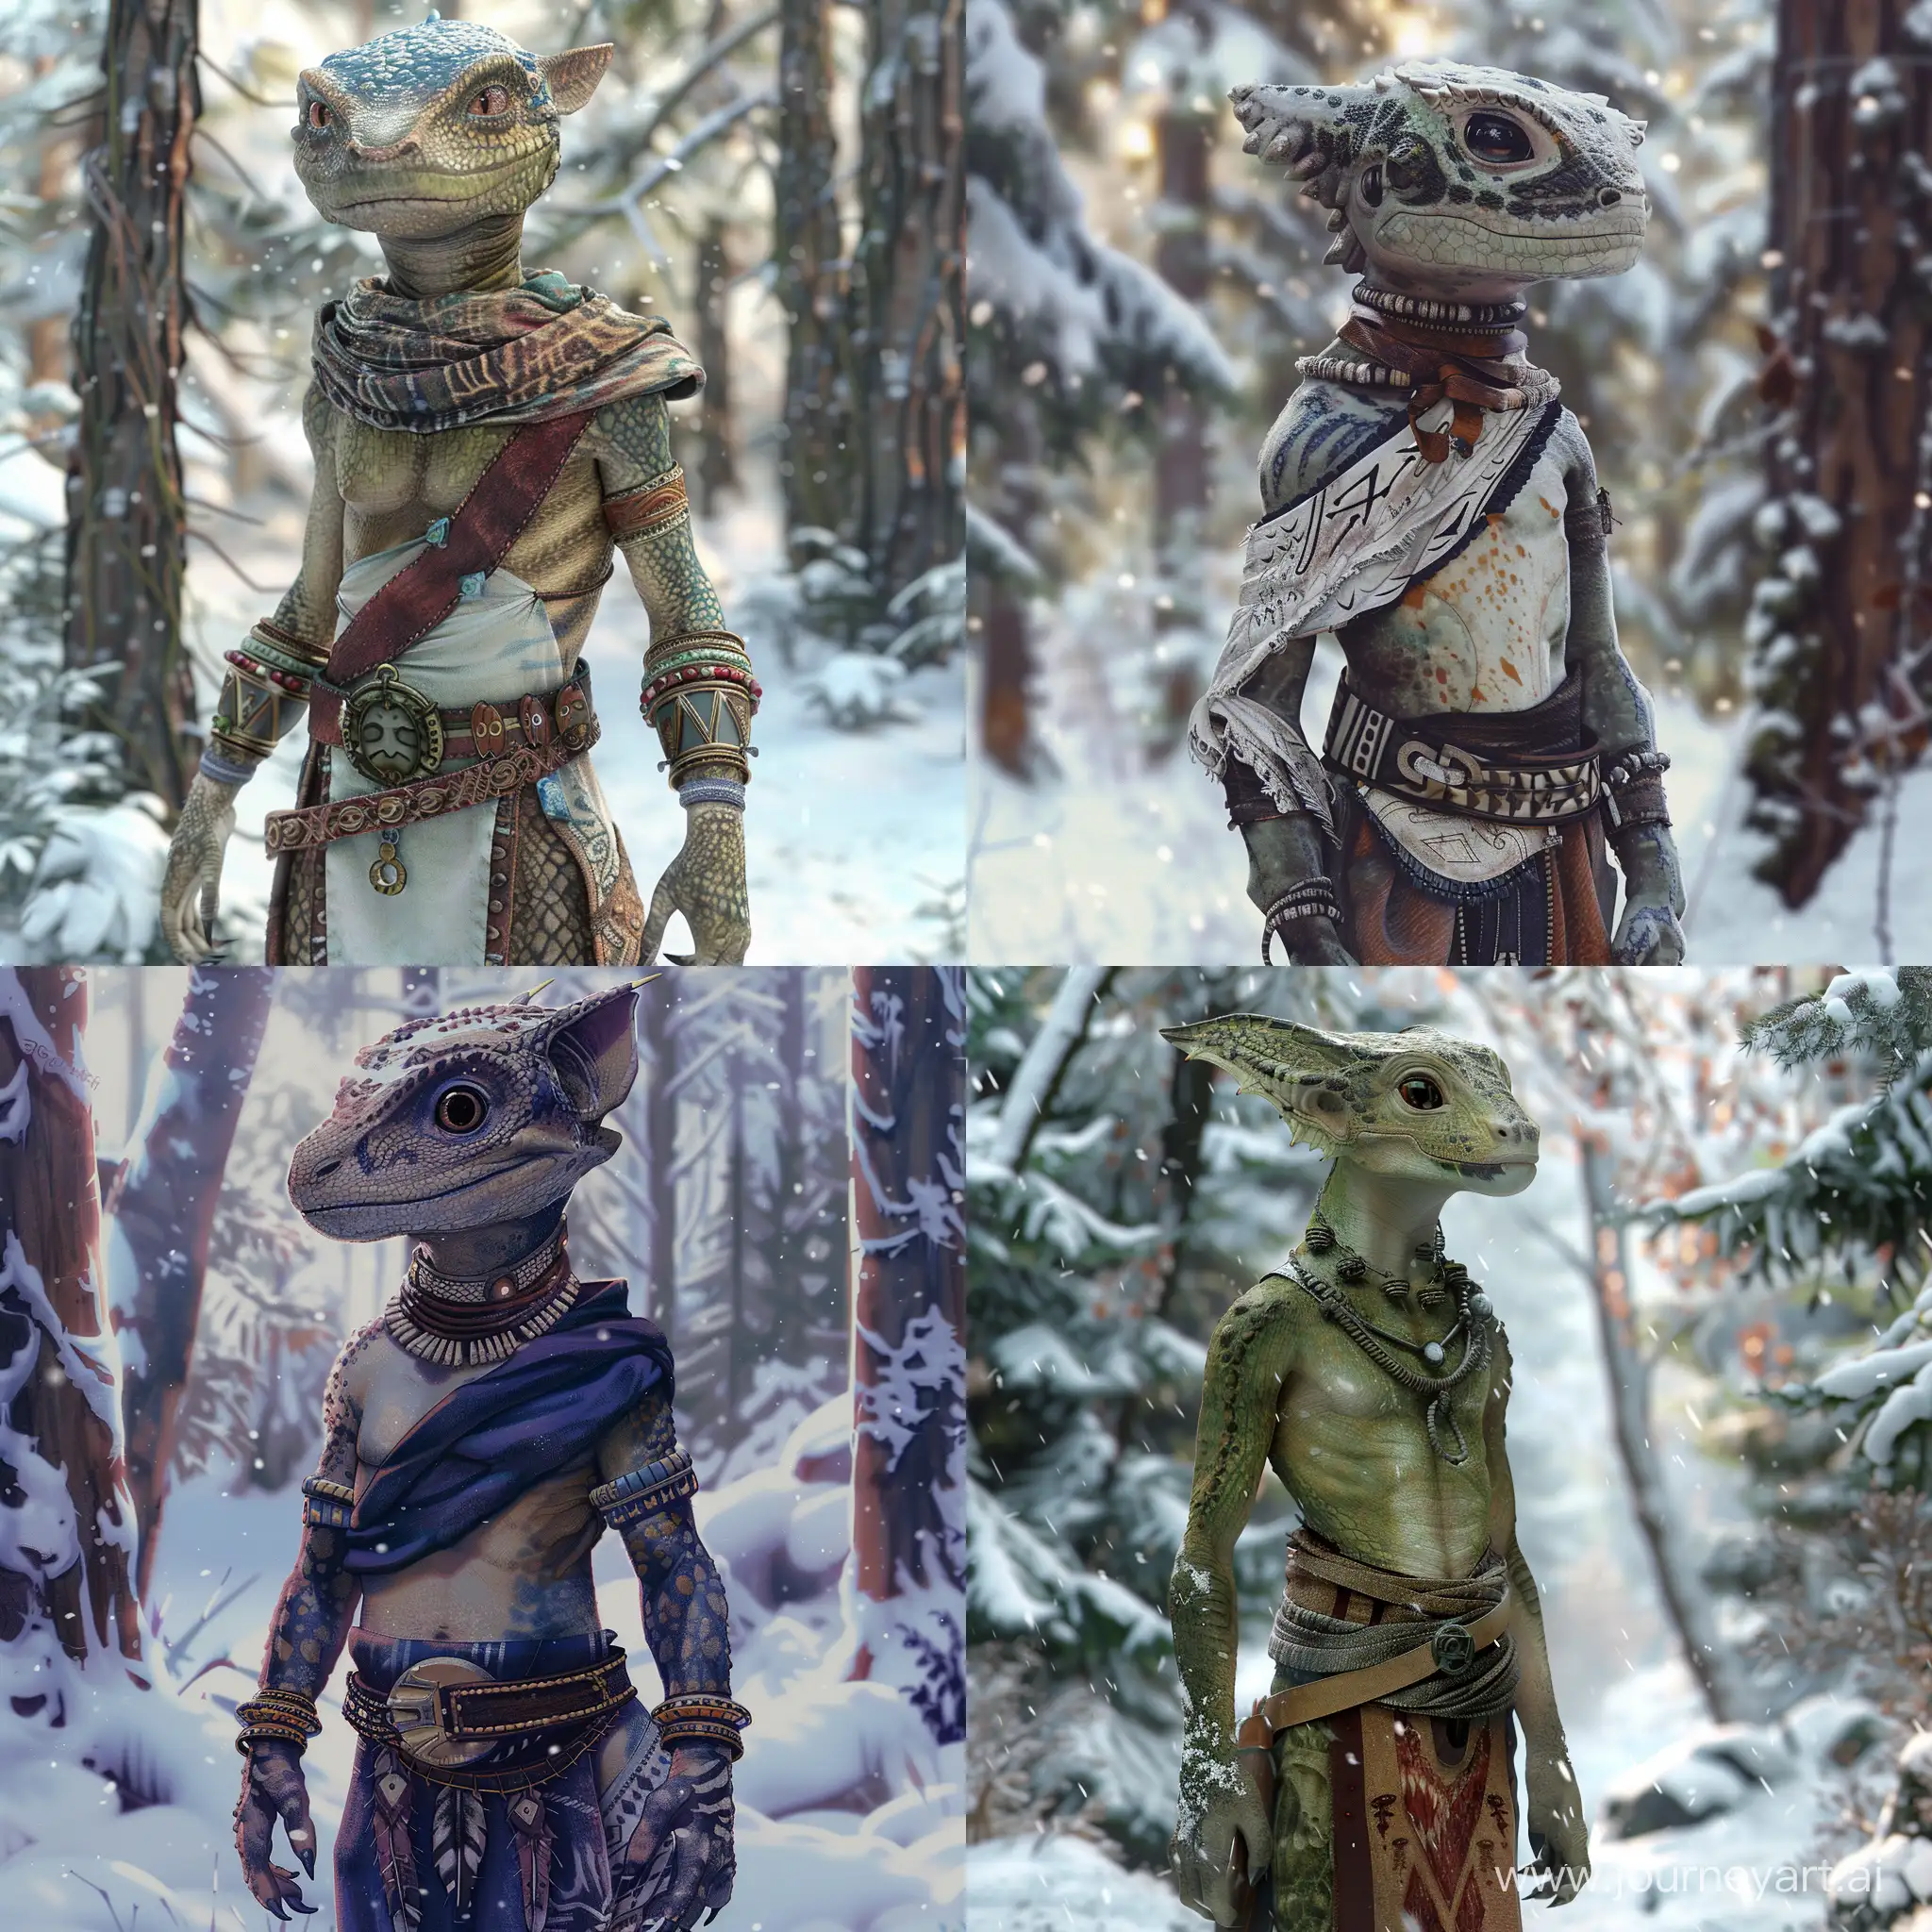 Anthro-Lizard-Boy-in-Tribal-Attire-Explores-Snowy-Forest